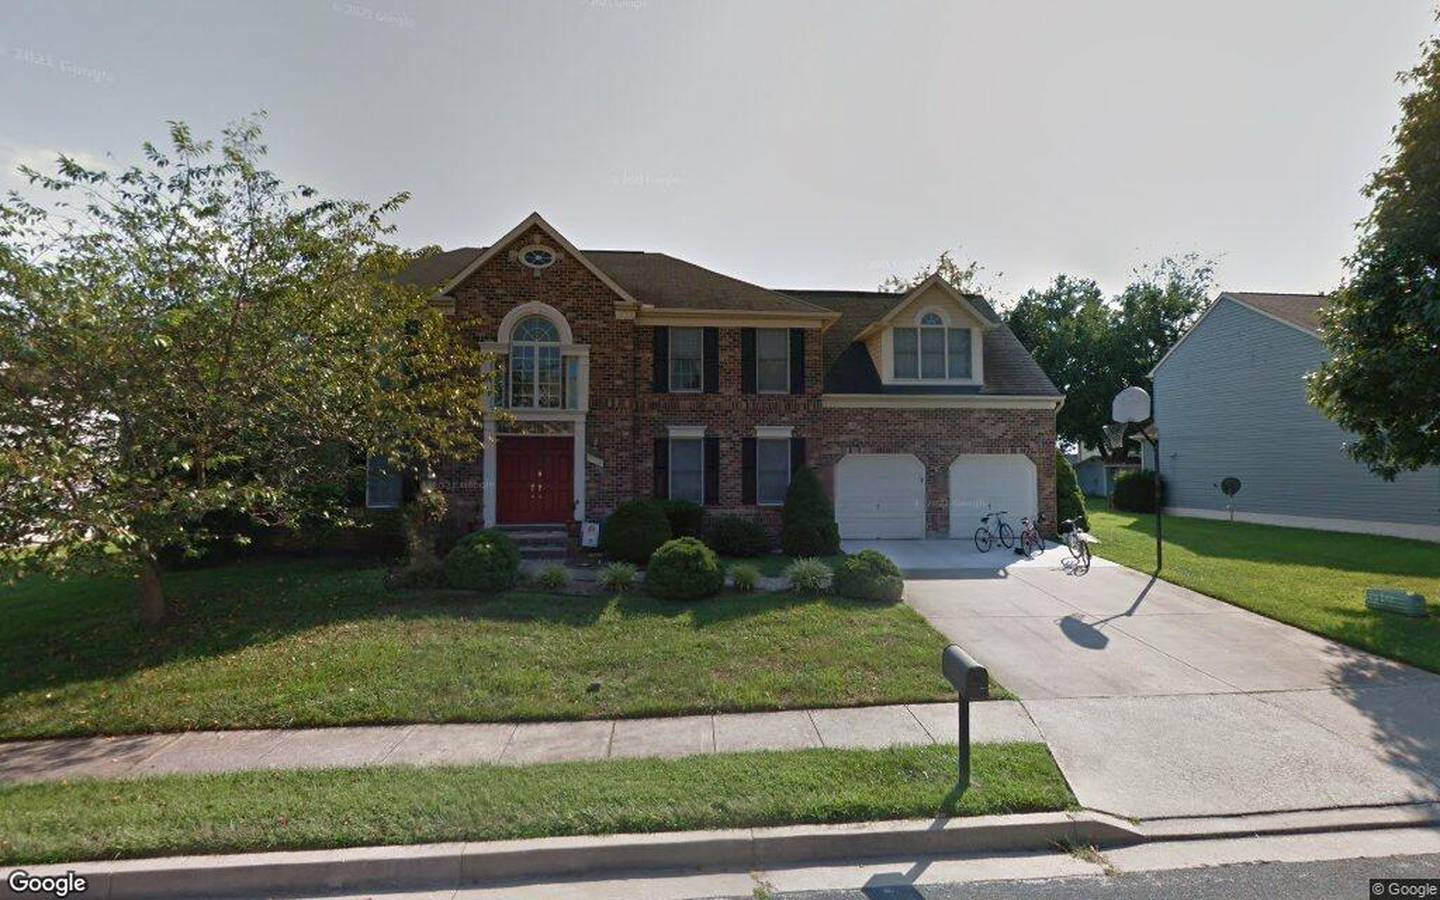 $660,000, single-family residence at 11988 Long Lake Drive 